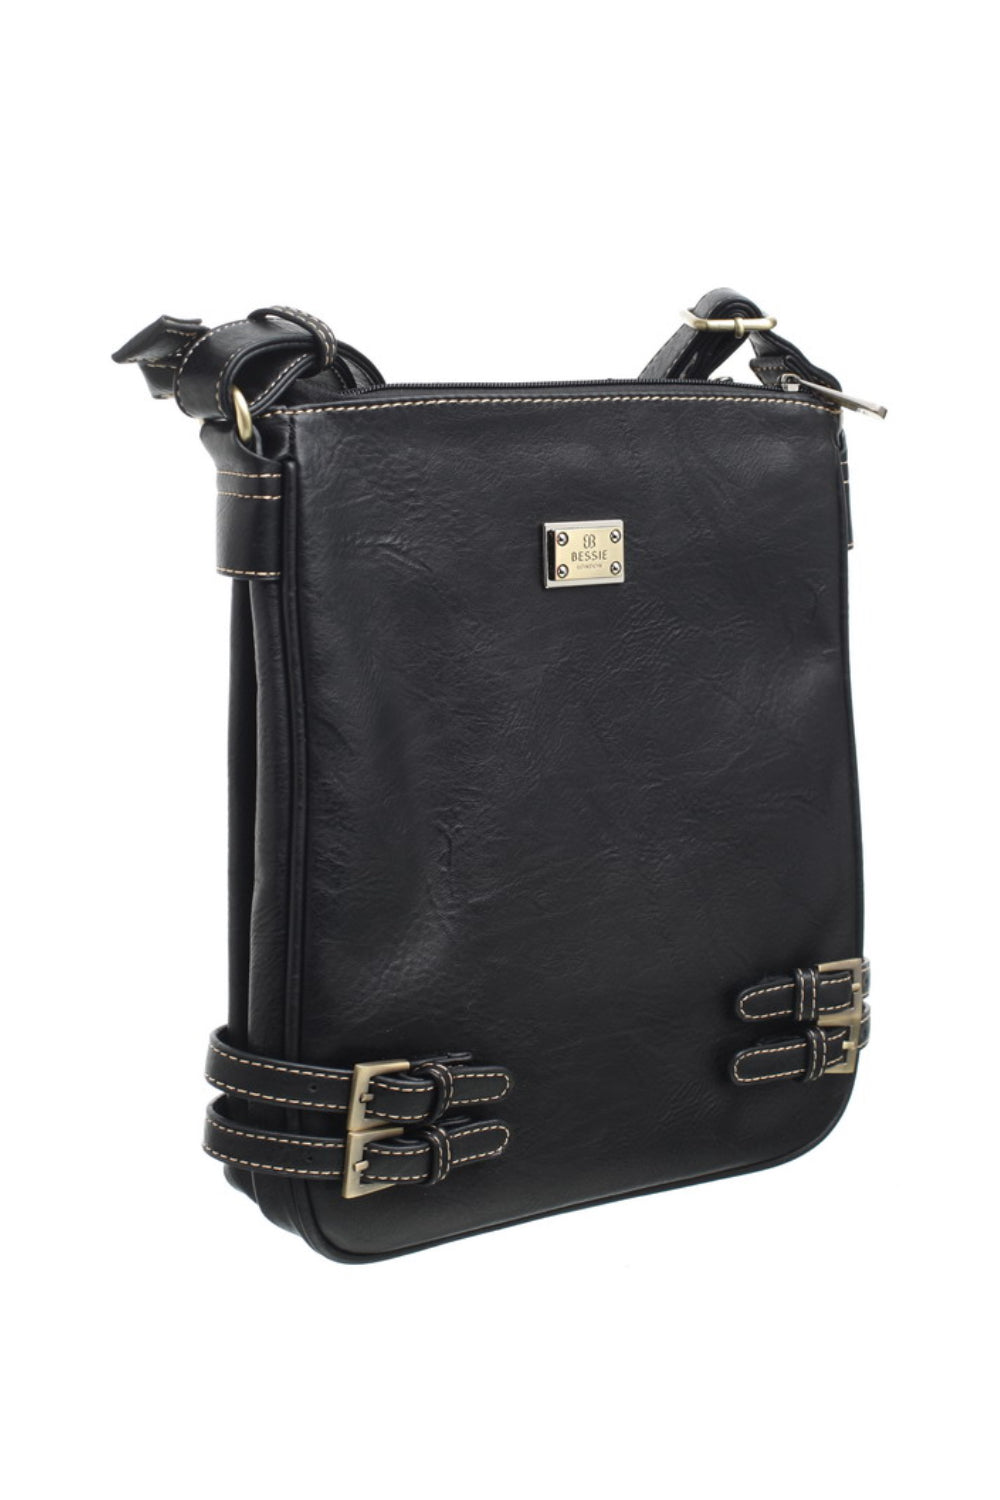 Bessie-Handbags-Double-Pocket-Crossbody-Bag-Black-djv-boutique-ipswich-1